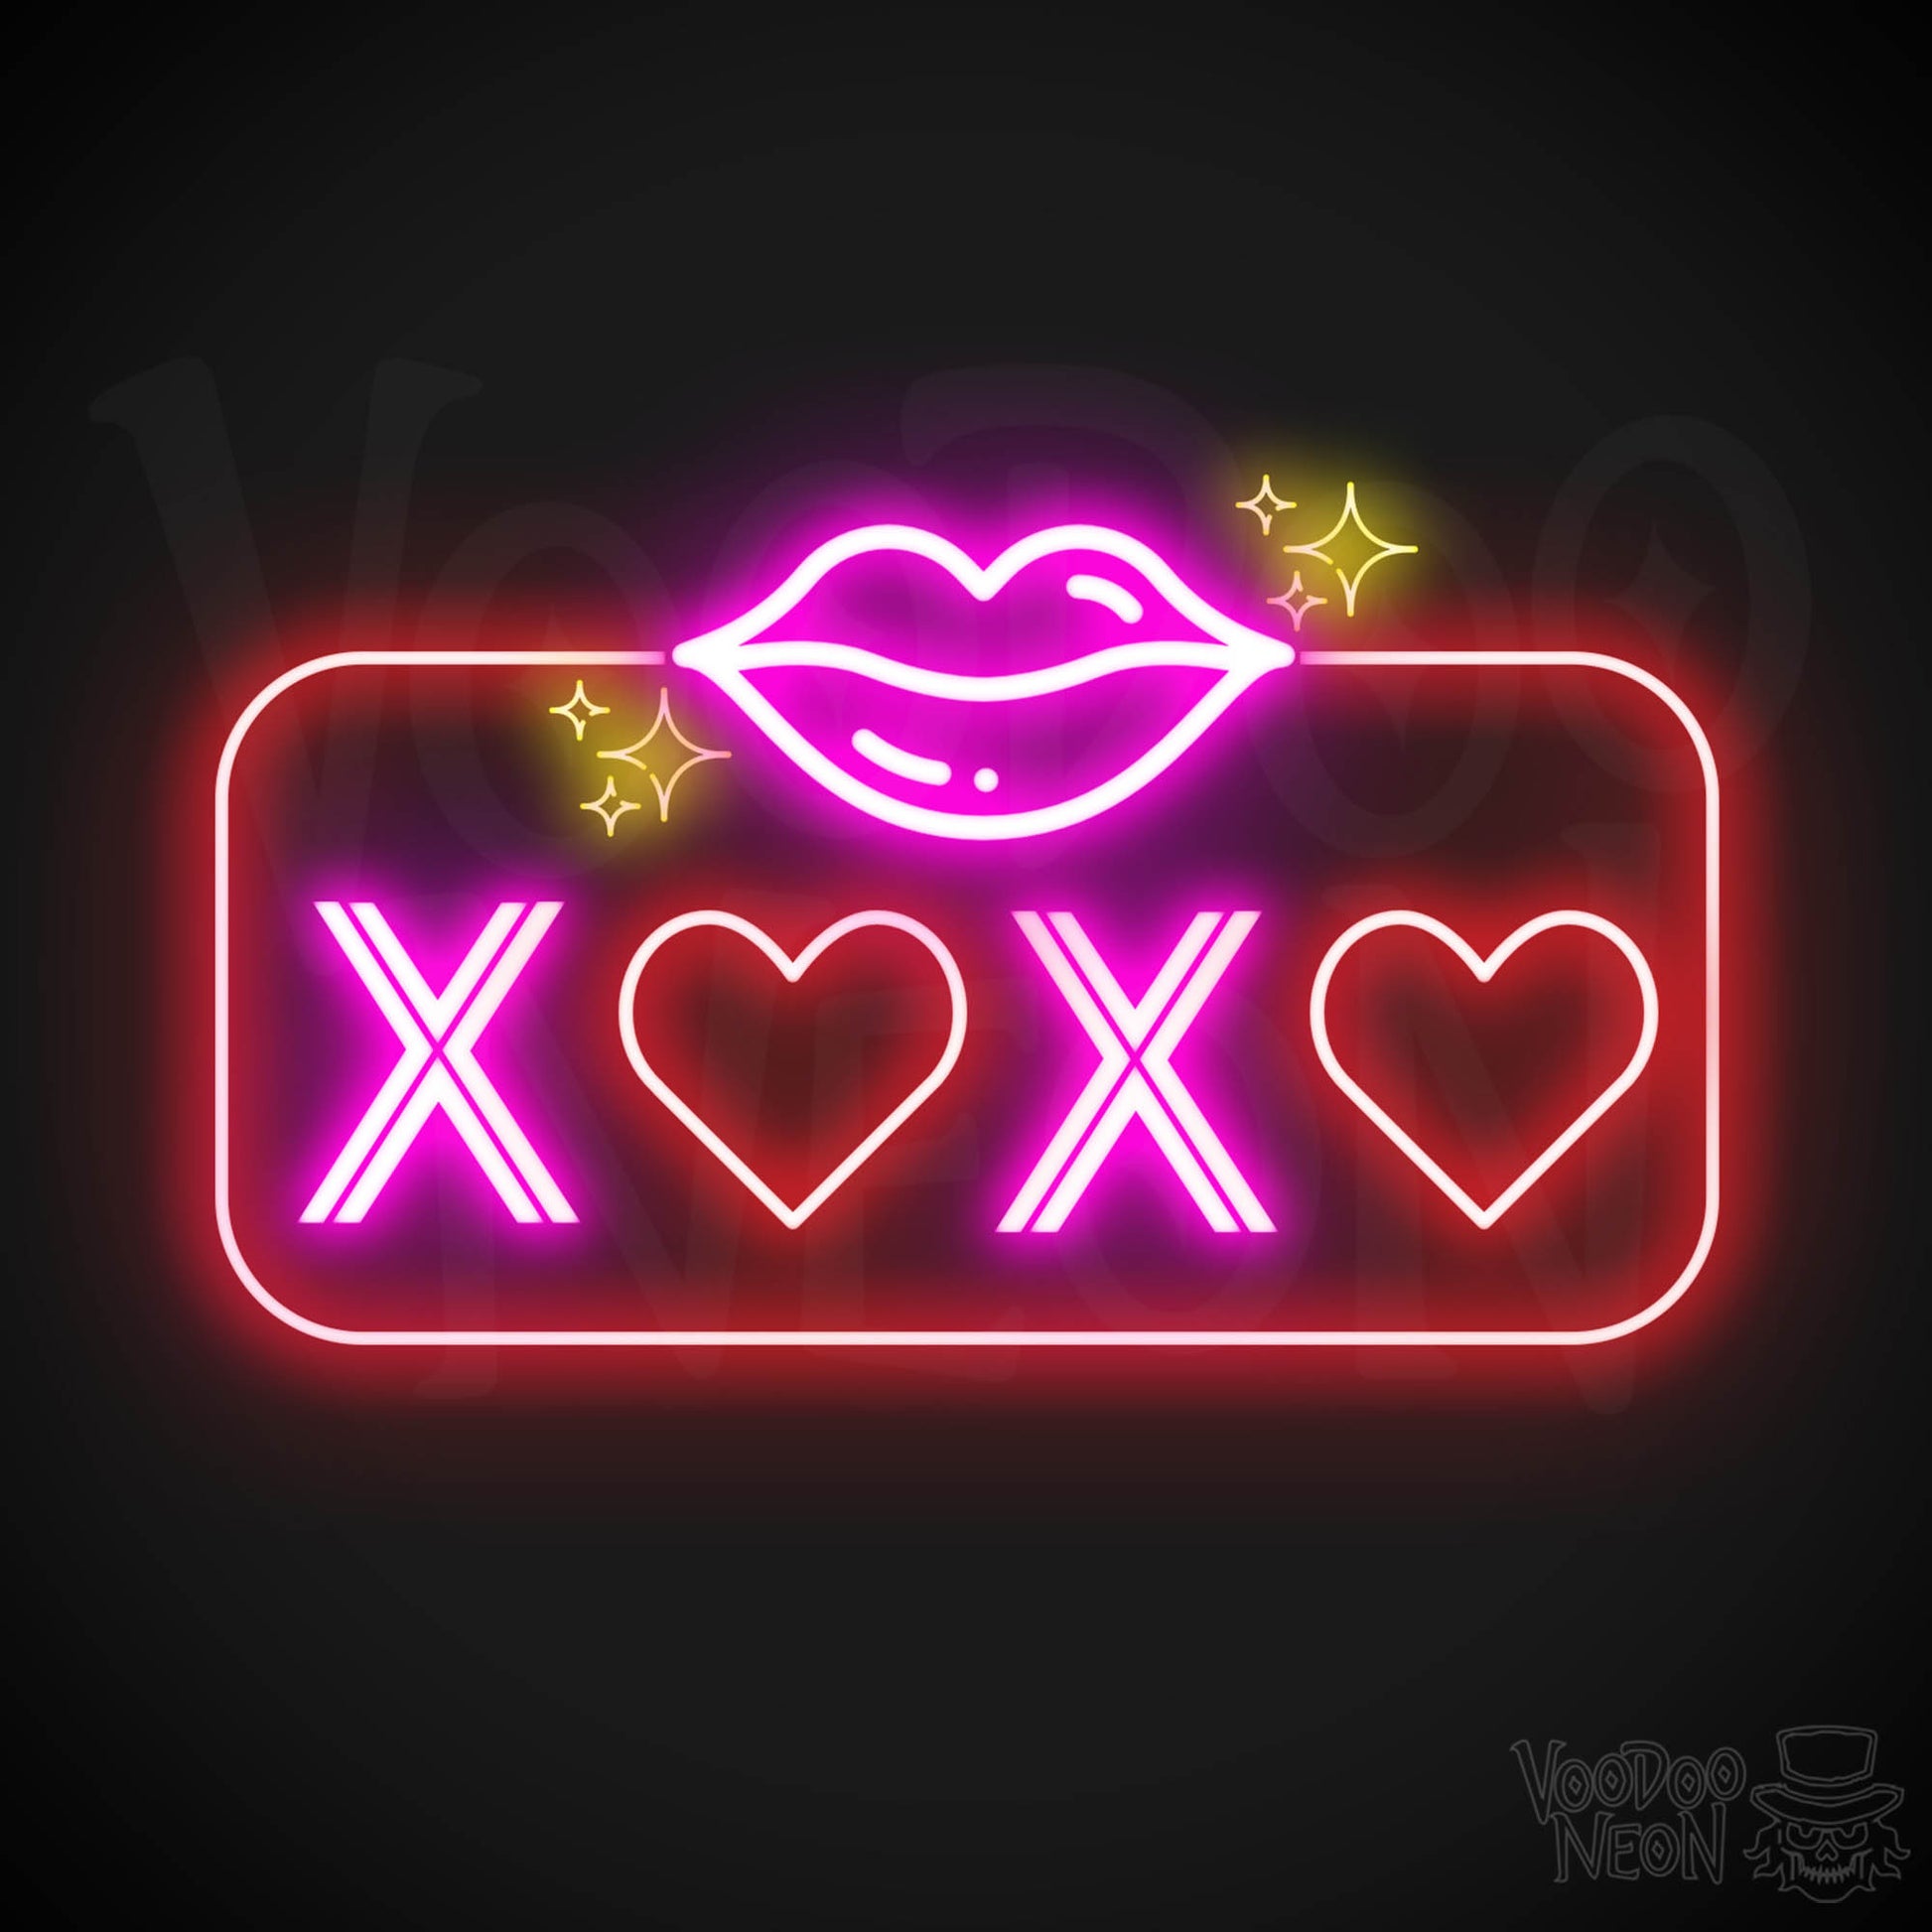 Xoxo Neon Sign - Neon XOXO - Kiss Hug Neon Wall Art - Color Multi-Color